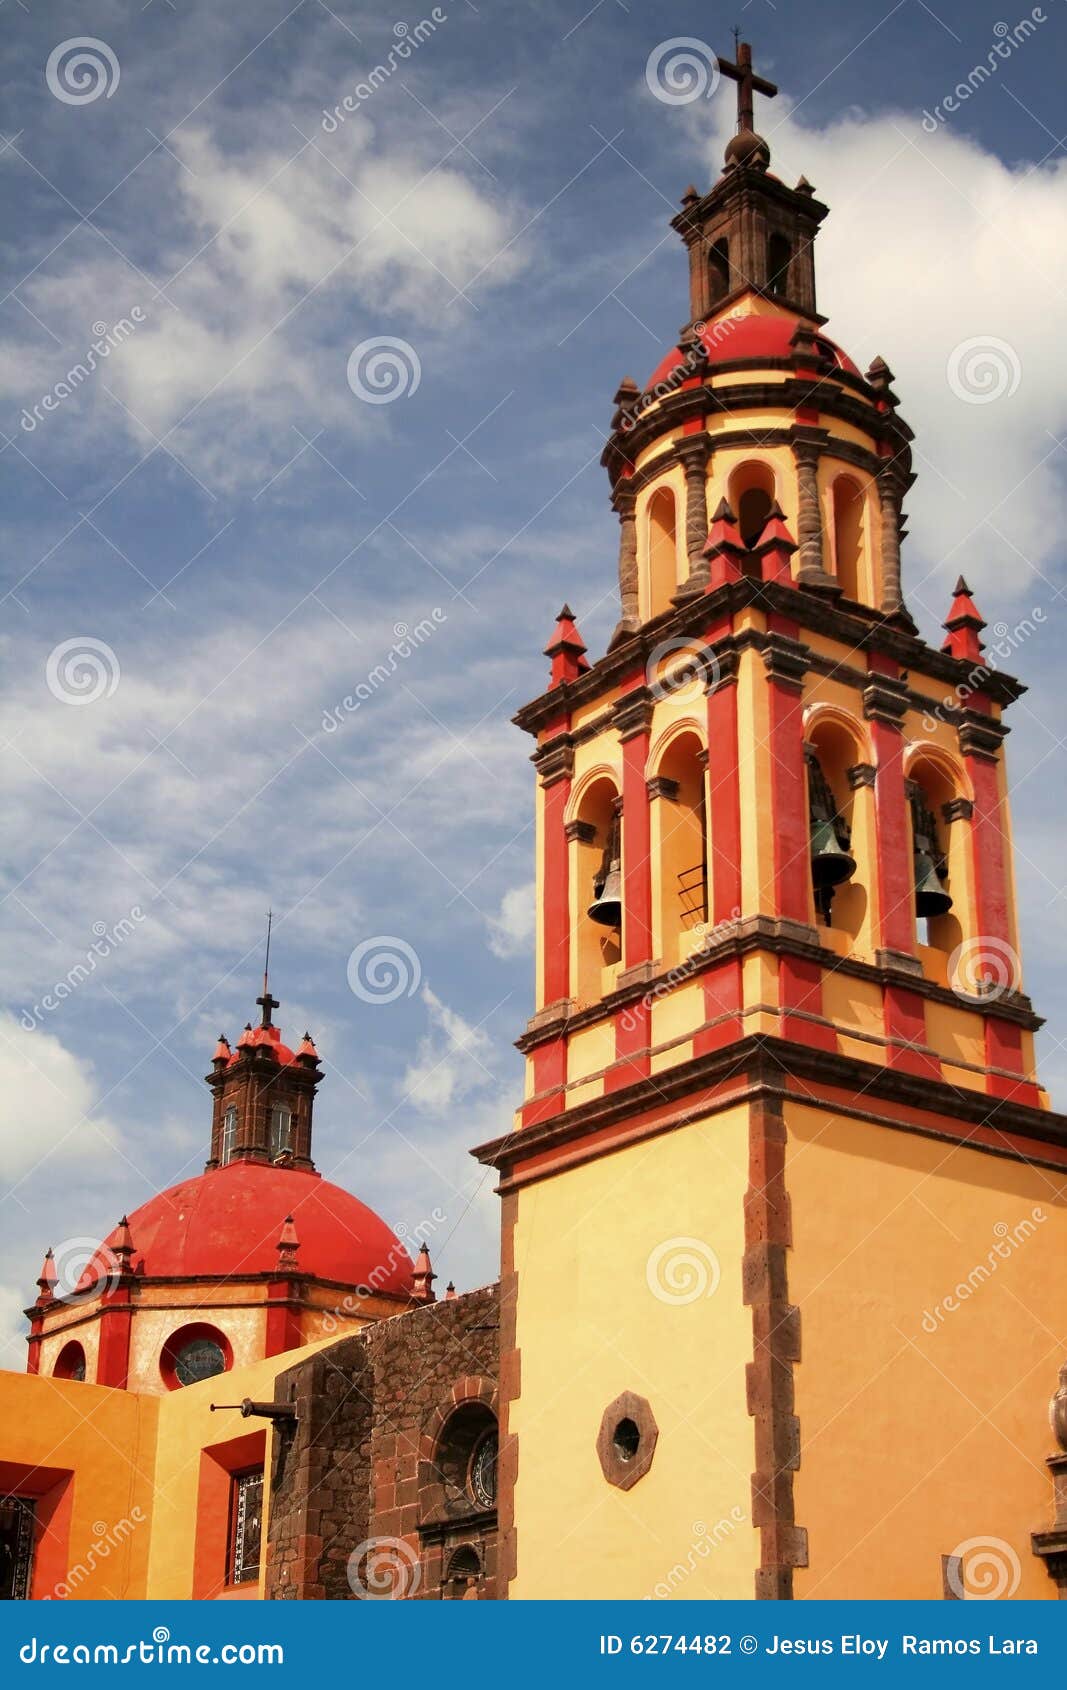 San juan del rio church stock photo. Image of travel, monastery - 6274482